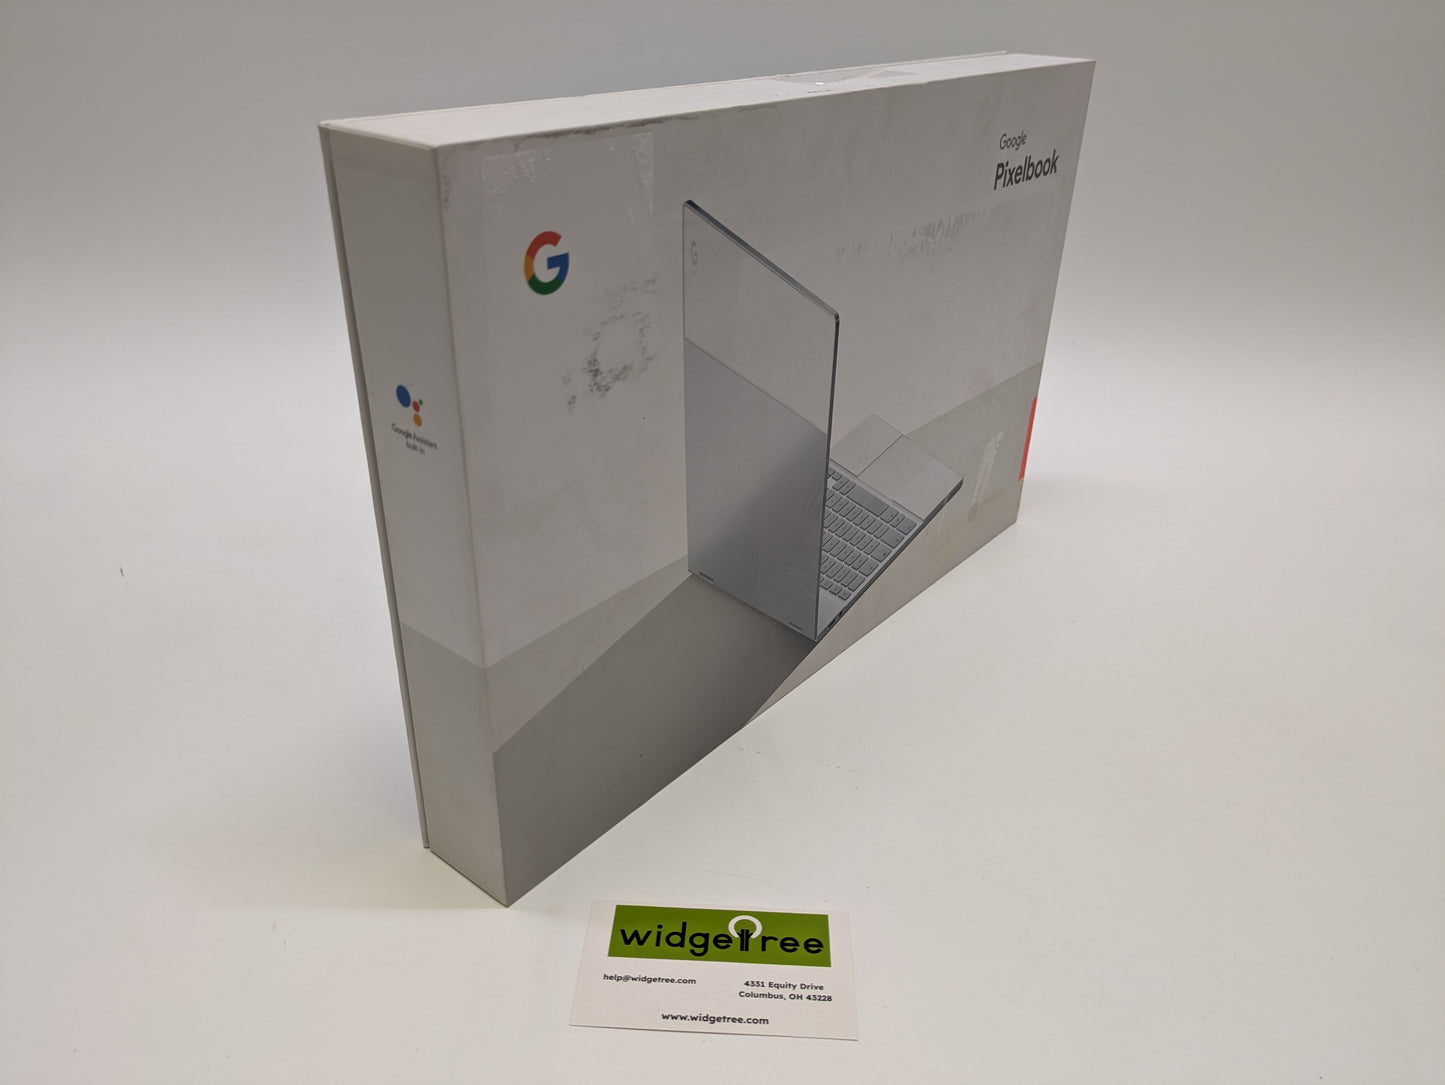 Google Pixelbook 12.3" Core i5 7th 8GB 256GB NVMe Laptop - GA00123-US Used